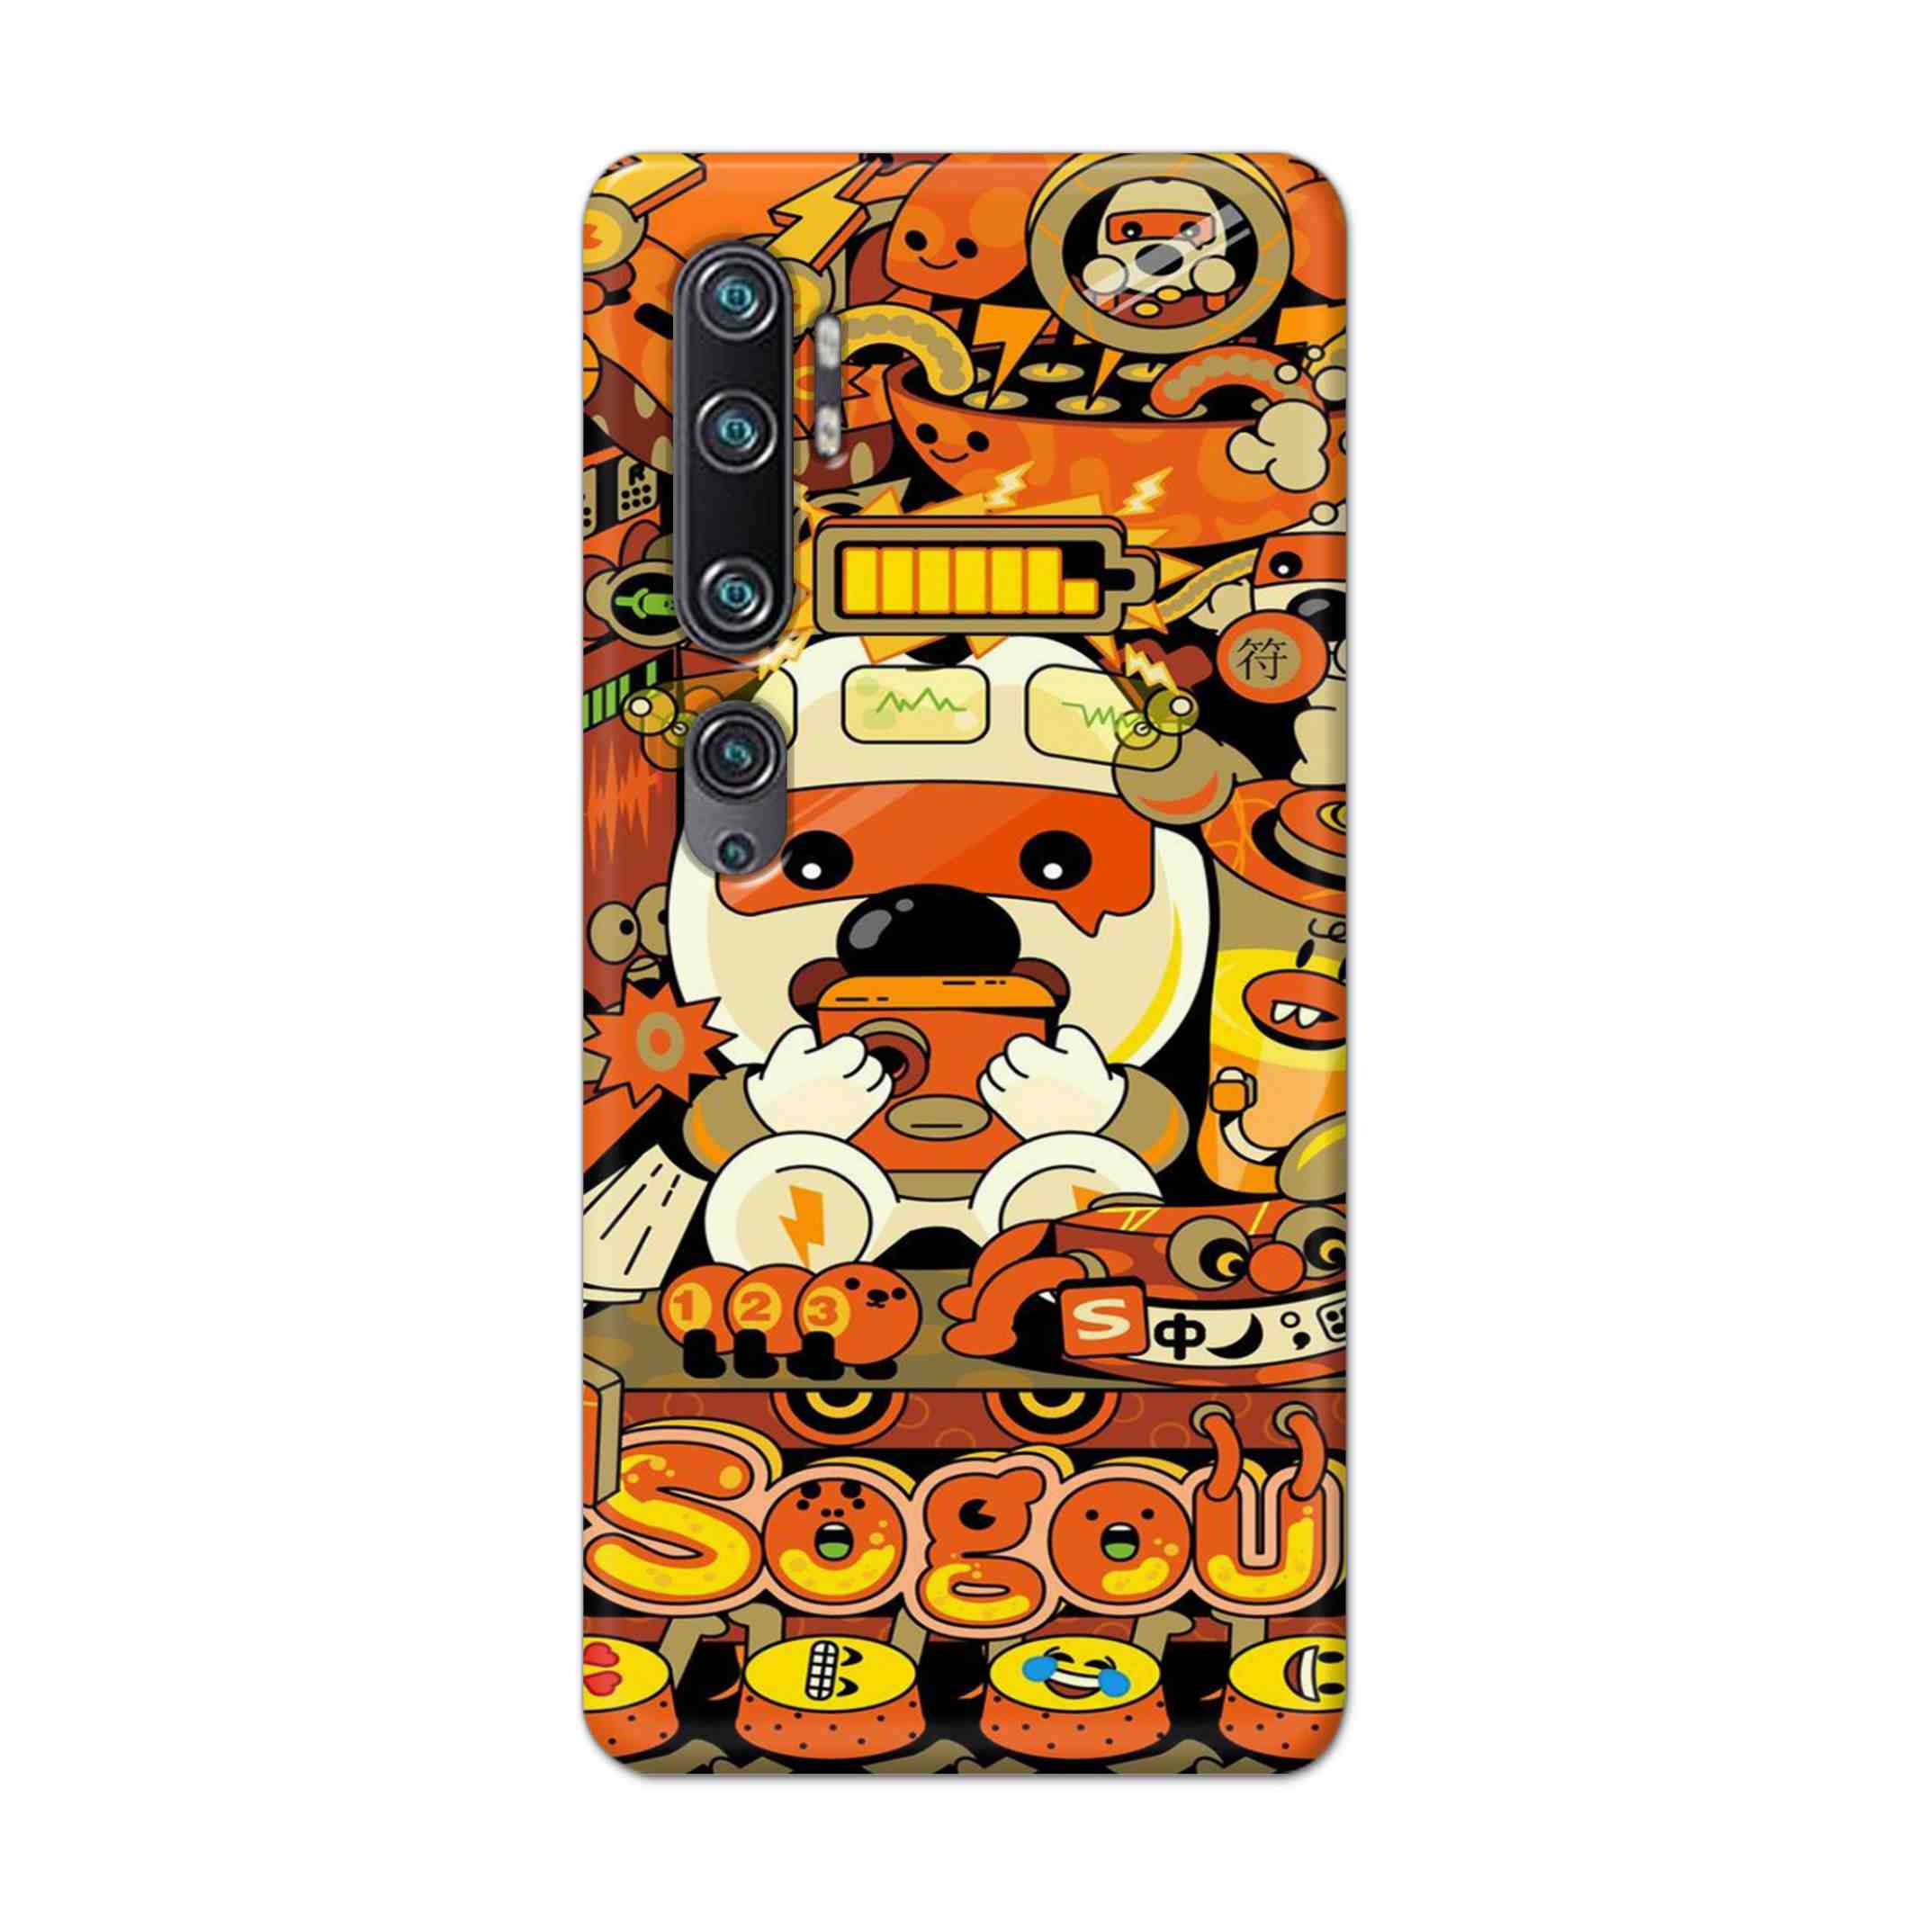 Buy Sogou Hard Back Mobile Phone Case Cover For Xiaomi Mi Note 10 Online